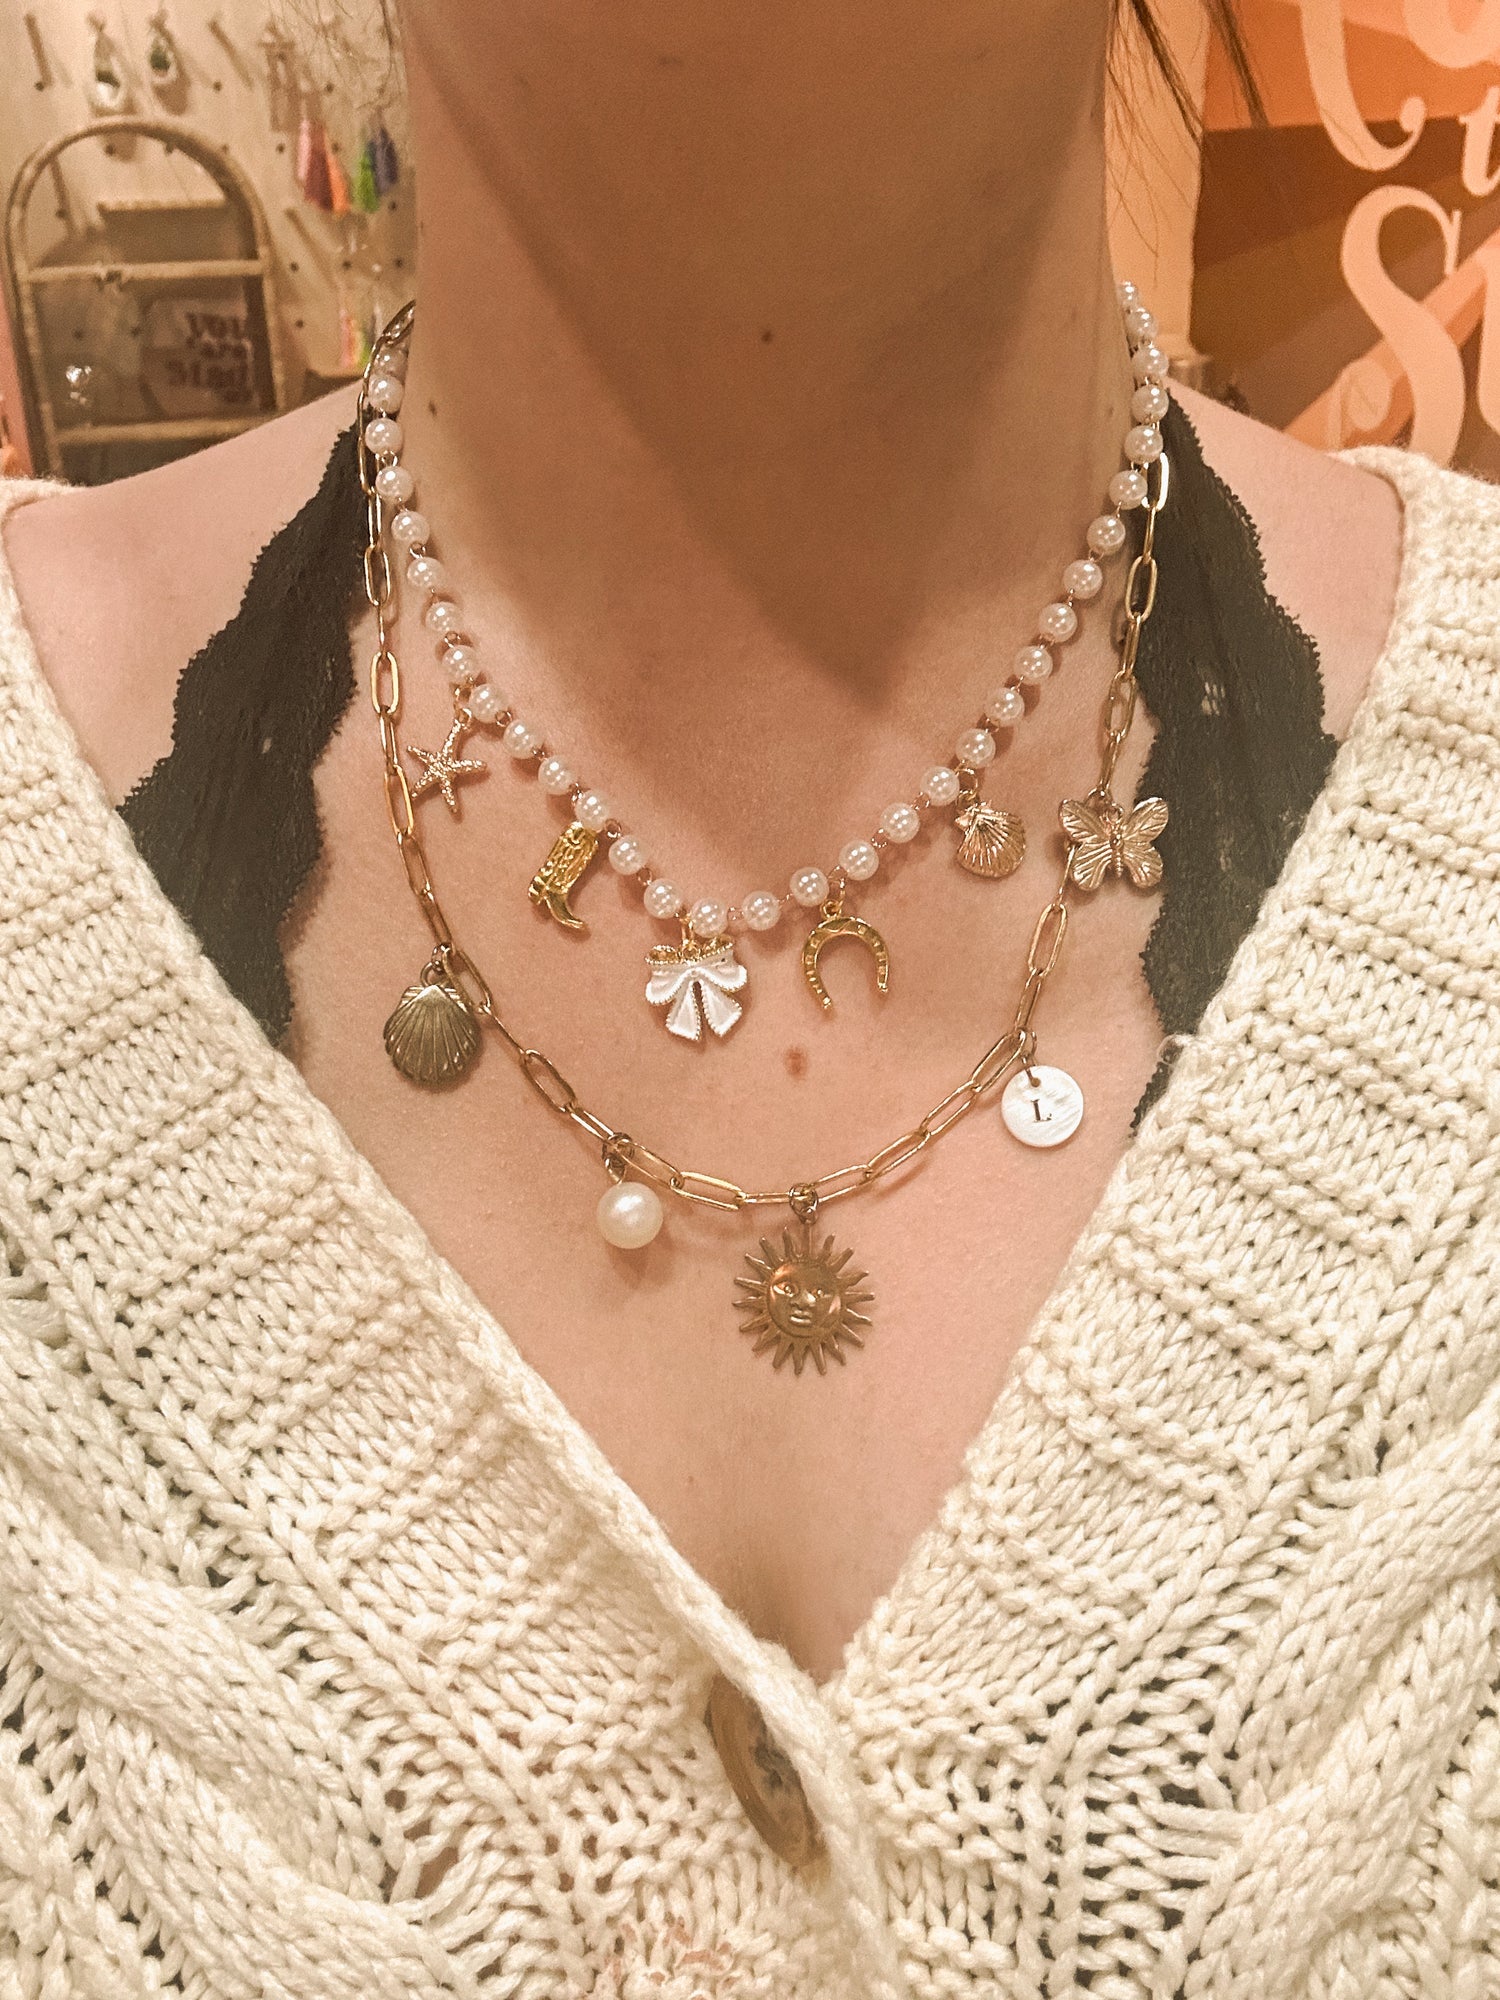 Custom charm necklace